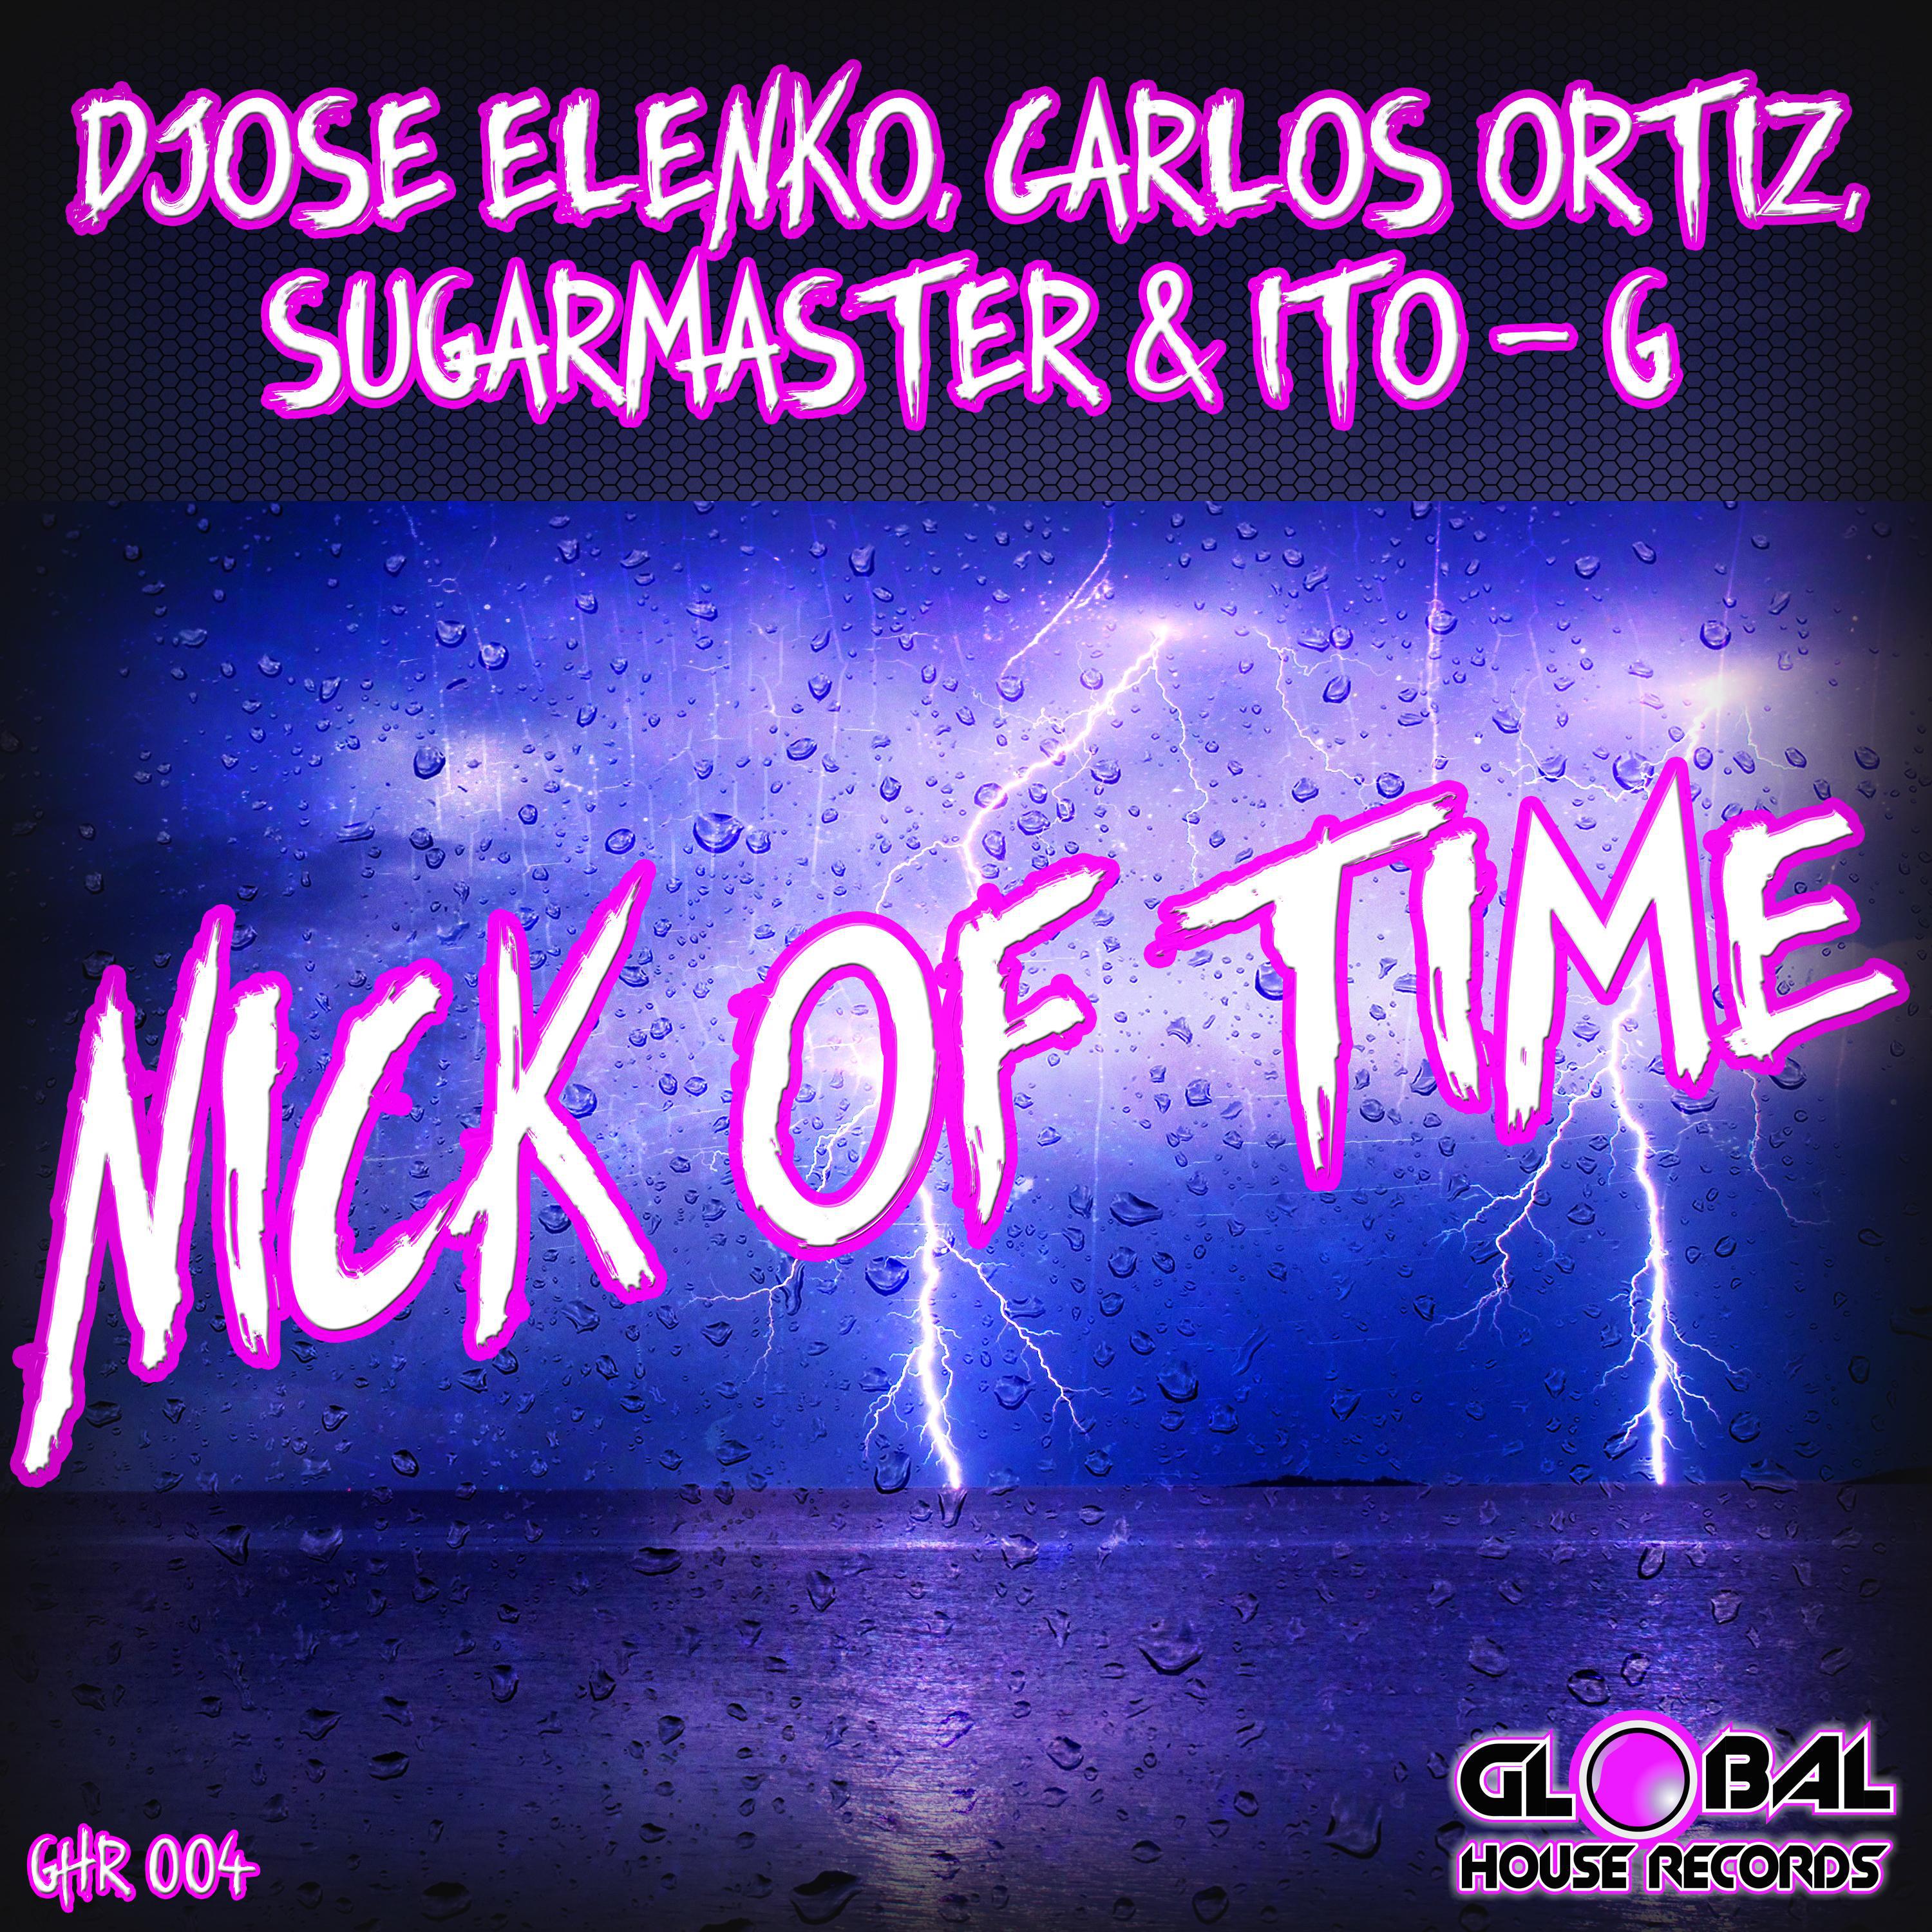 Jose Elenko - Nick of Time